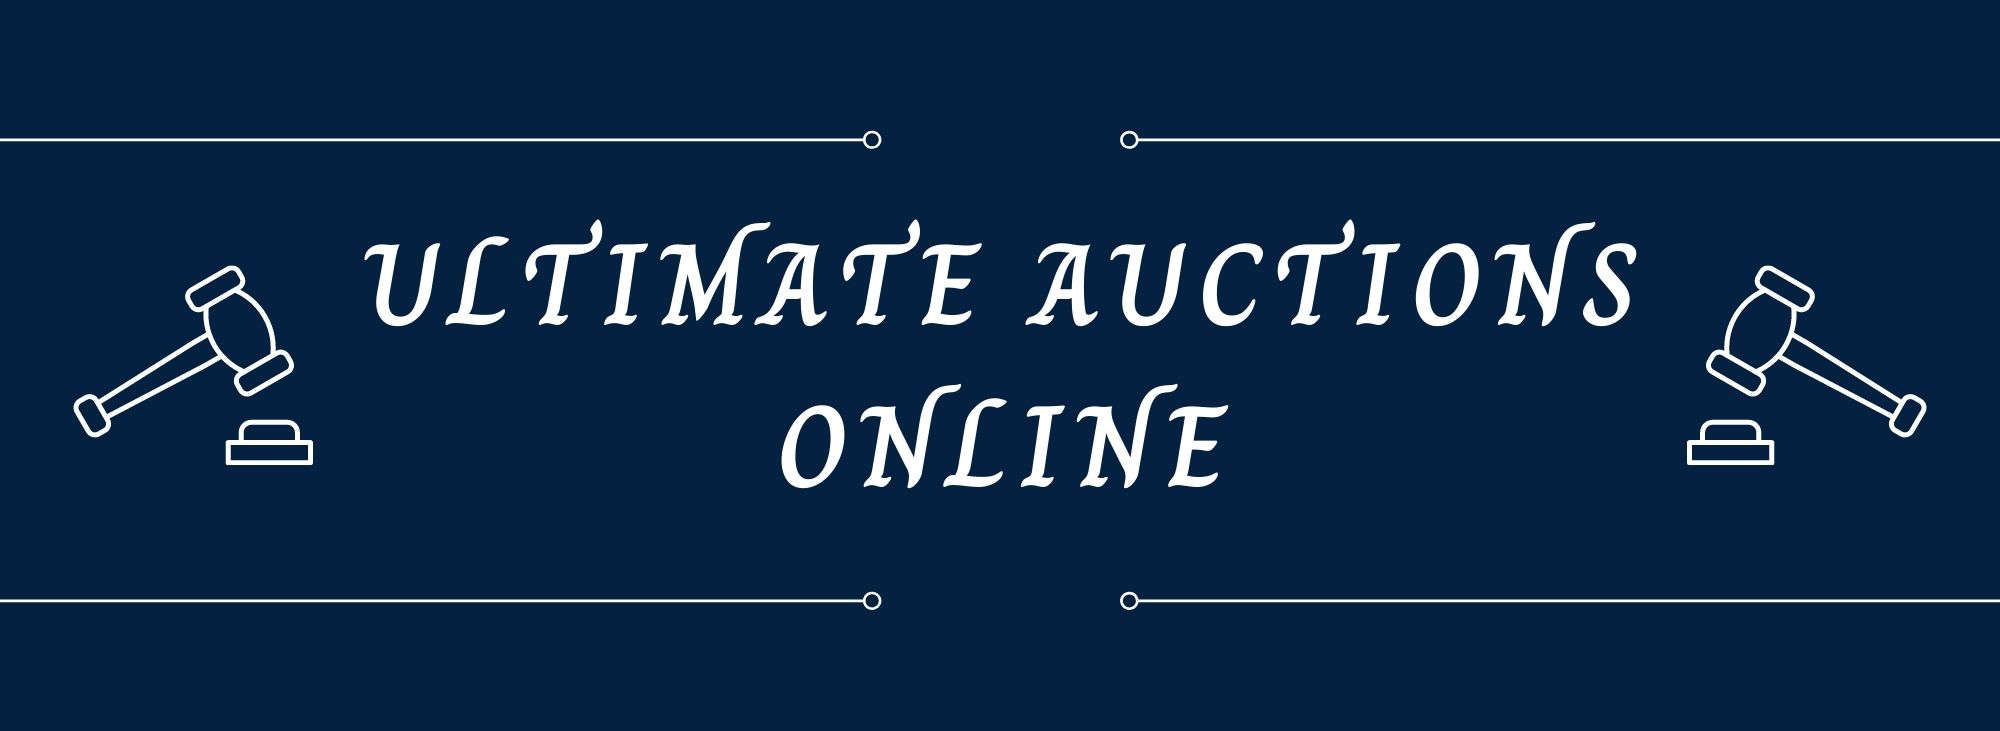 Ultimate Auctions Online | Auction Ninja